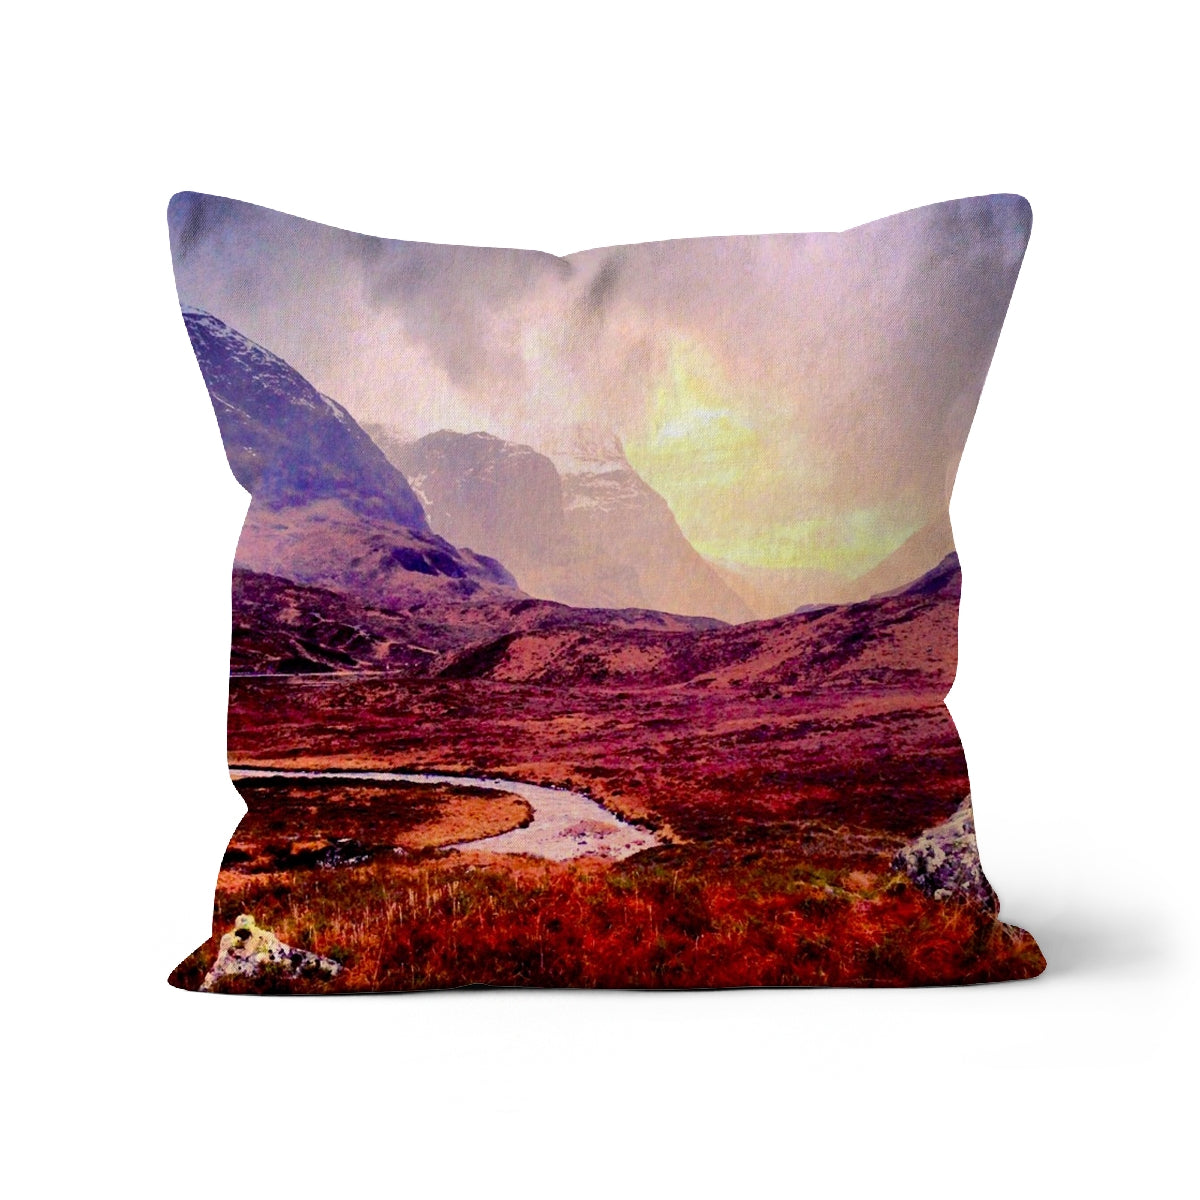 A Brooding Glencoe Art Gifts Cushion-Cushions-Glencoe Art Gallery-Canvas-18"x18"-Paintings, Prints, Homeware, Art Gifts From Scotland By Scottish Artist Kevin Hunter